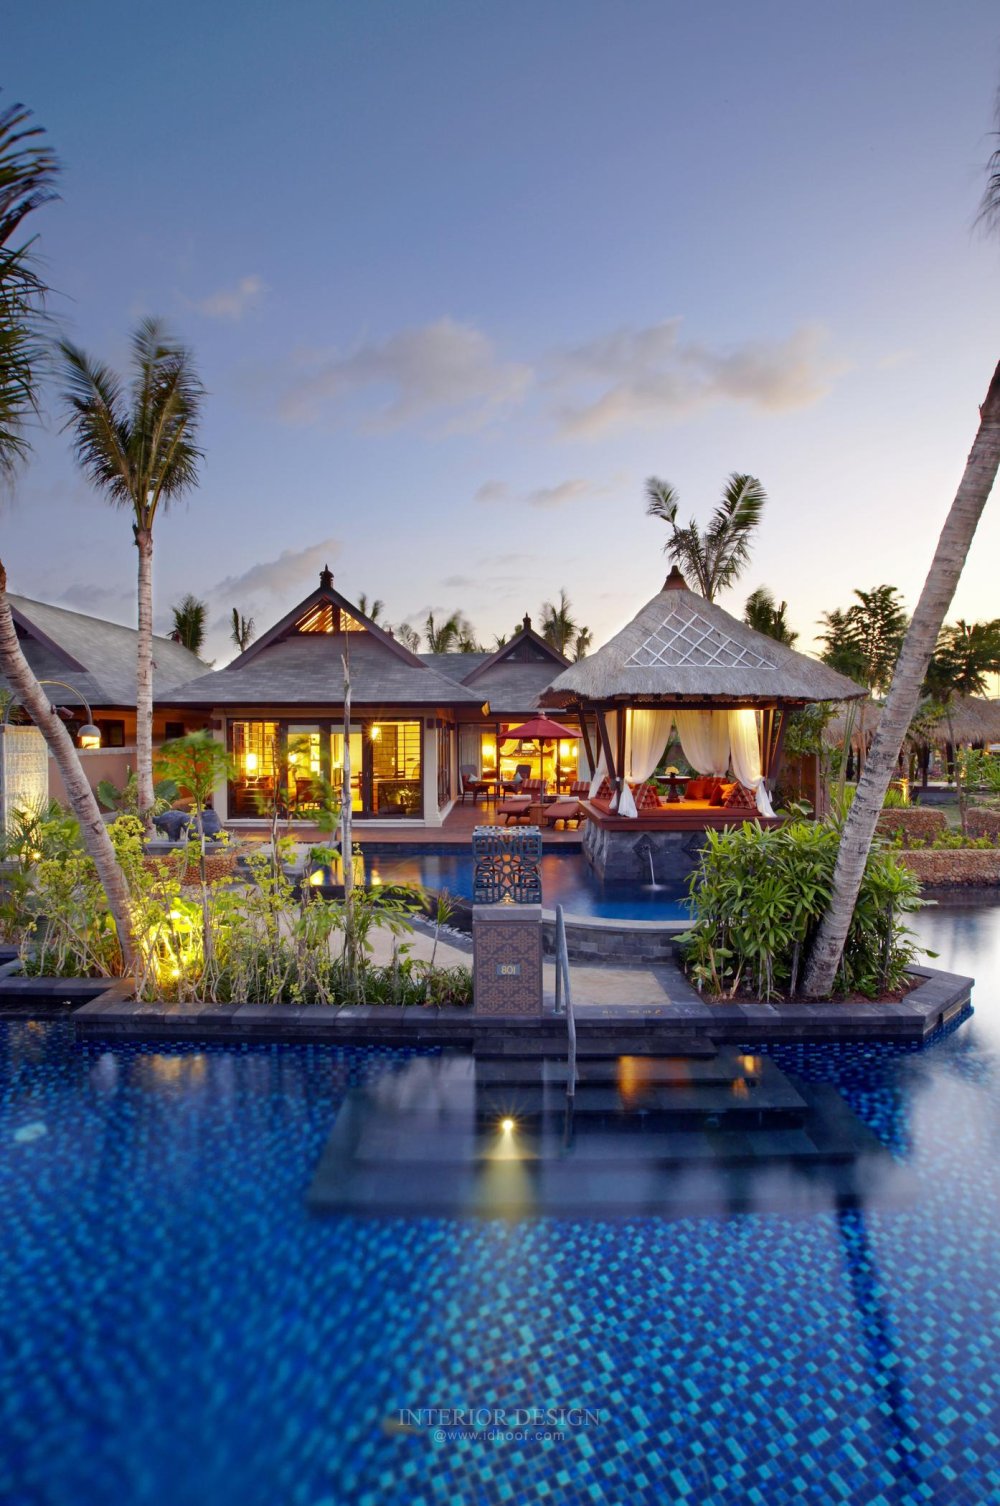 巴厘岛瑞吉酒店(官方摄影) The St. Regis Bali Resort, Bali_8401310625_421ed89e36_o.jpg